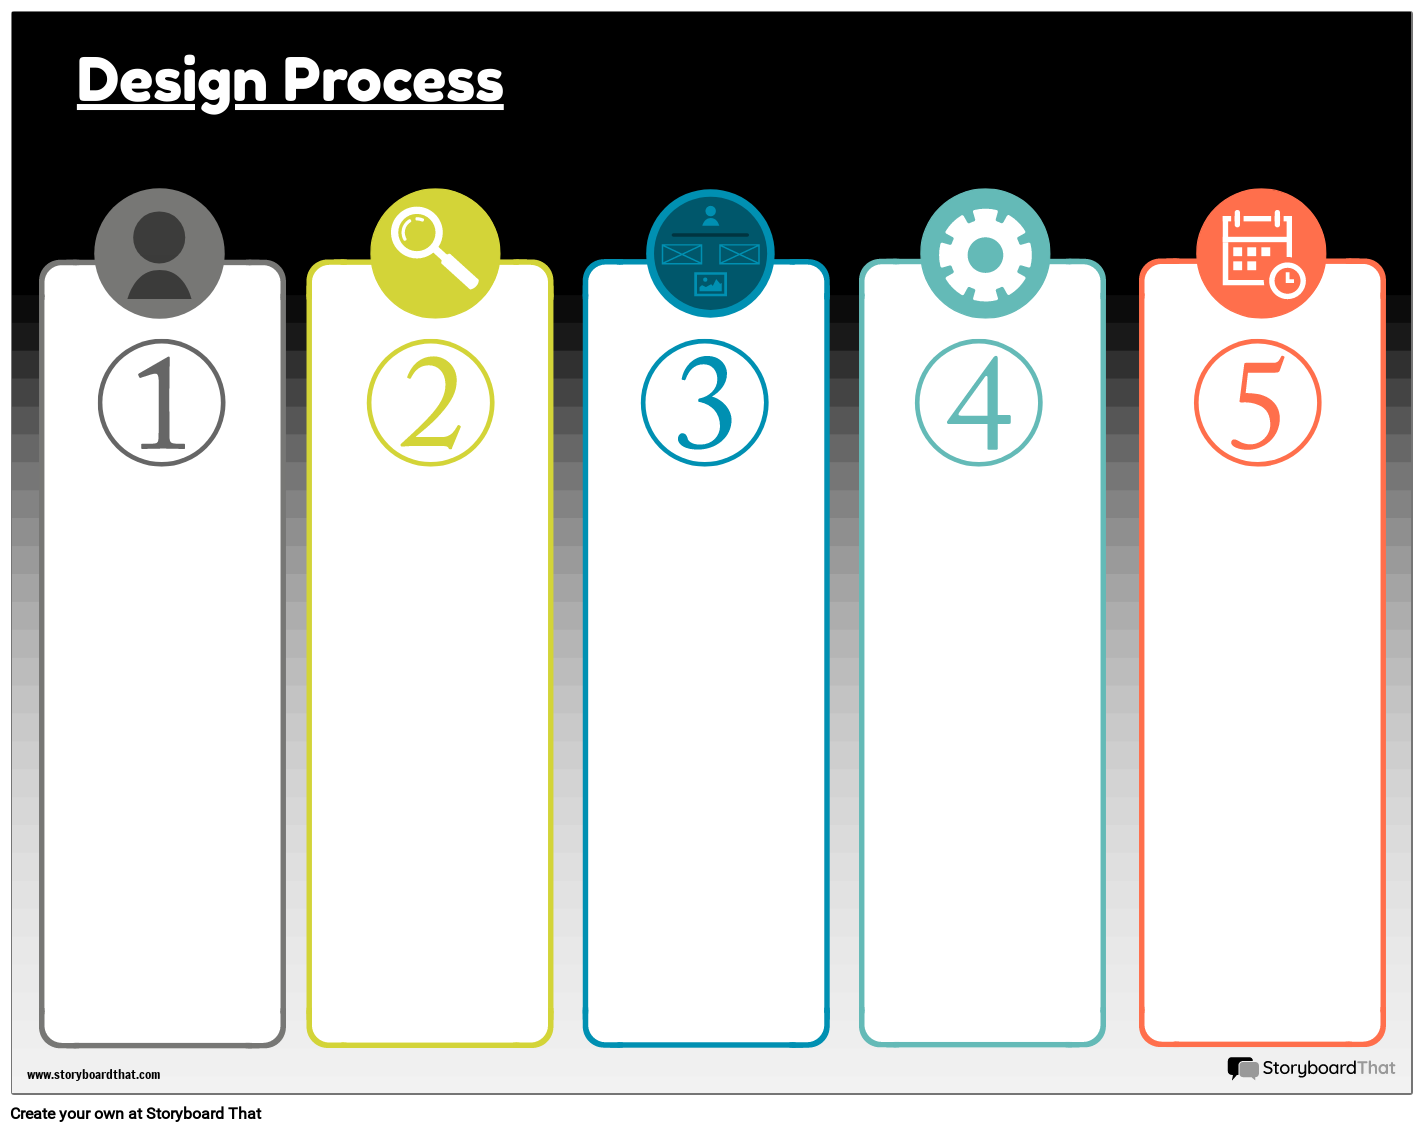 Design Process 1